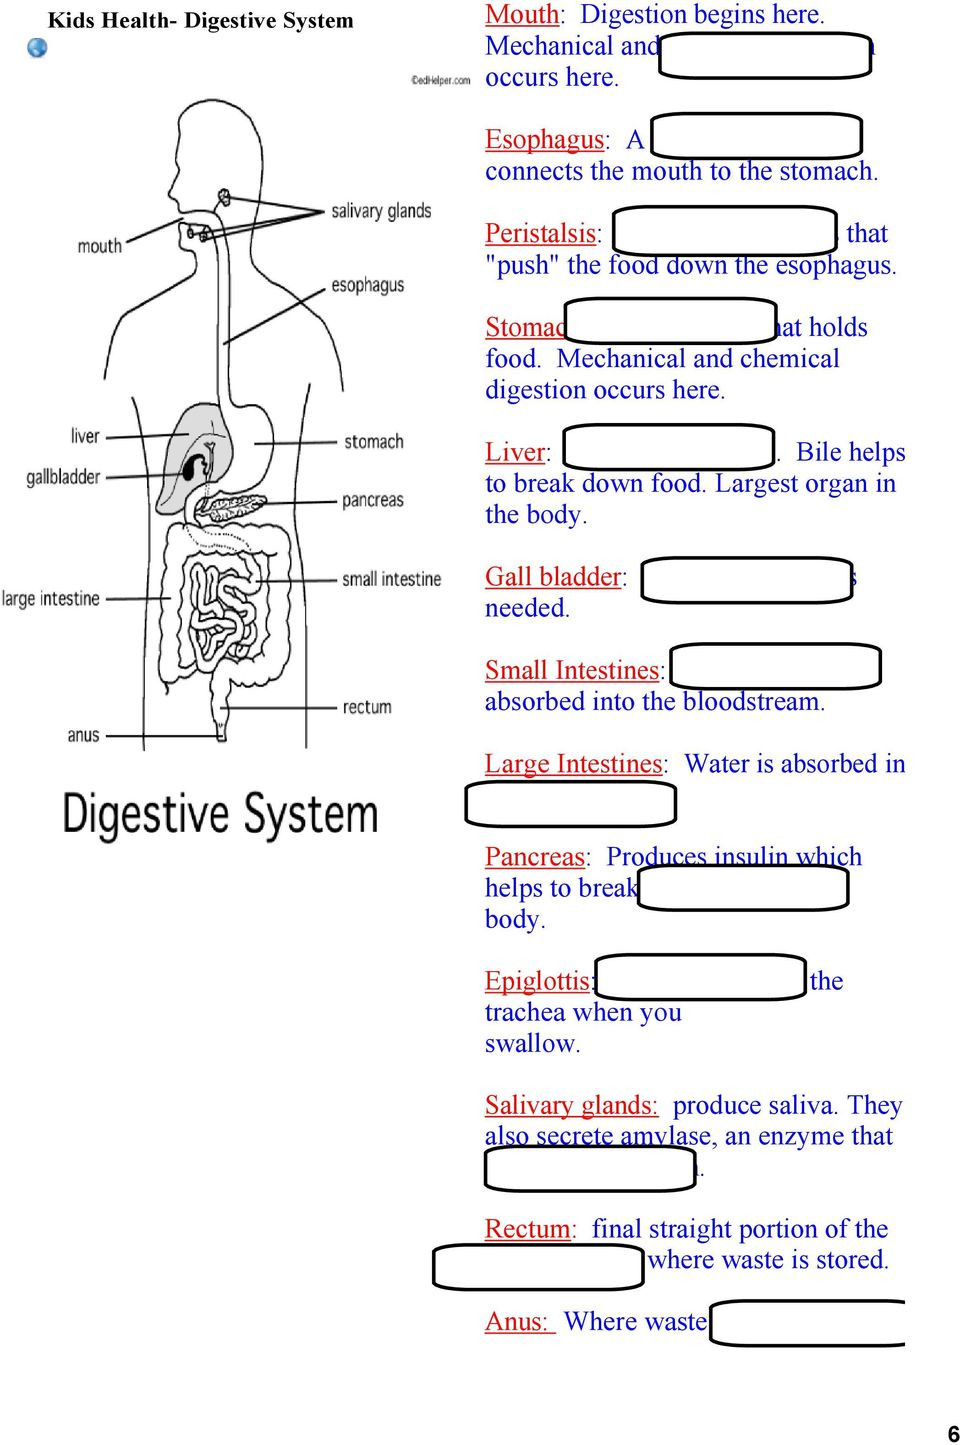 Digestive System Worksheet Answer Key Magic School Bus Digestive System Brainpop Digestive System